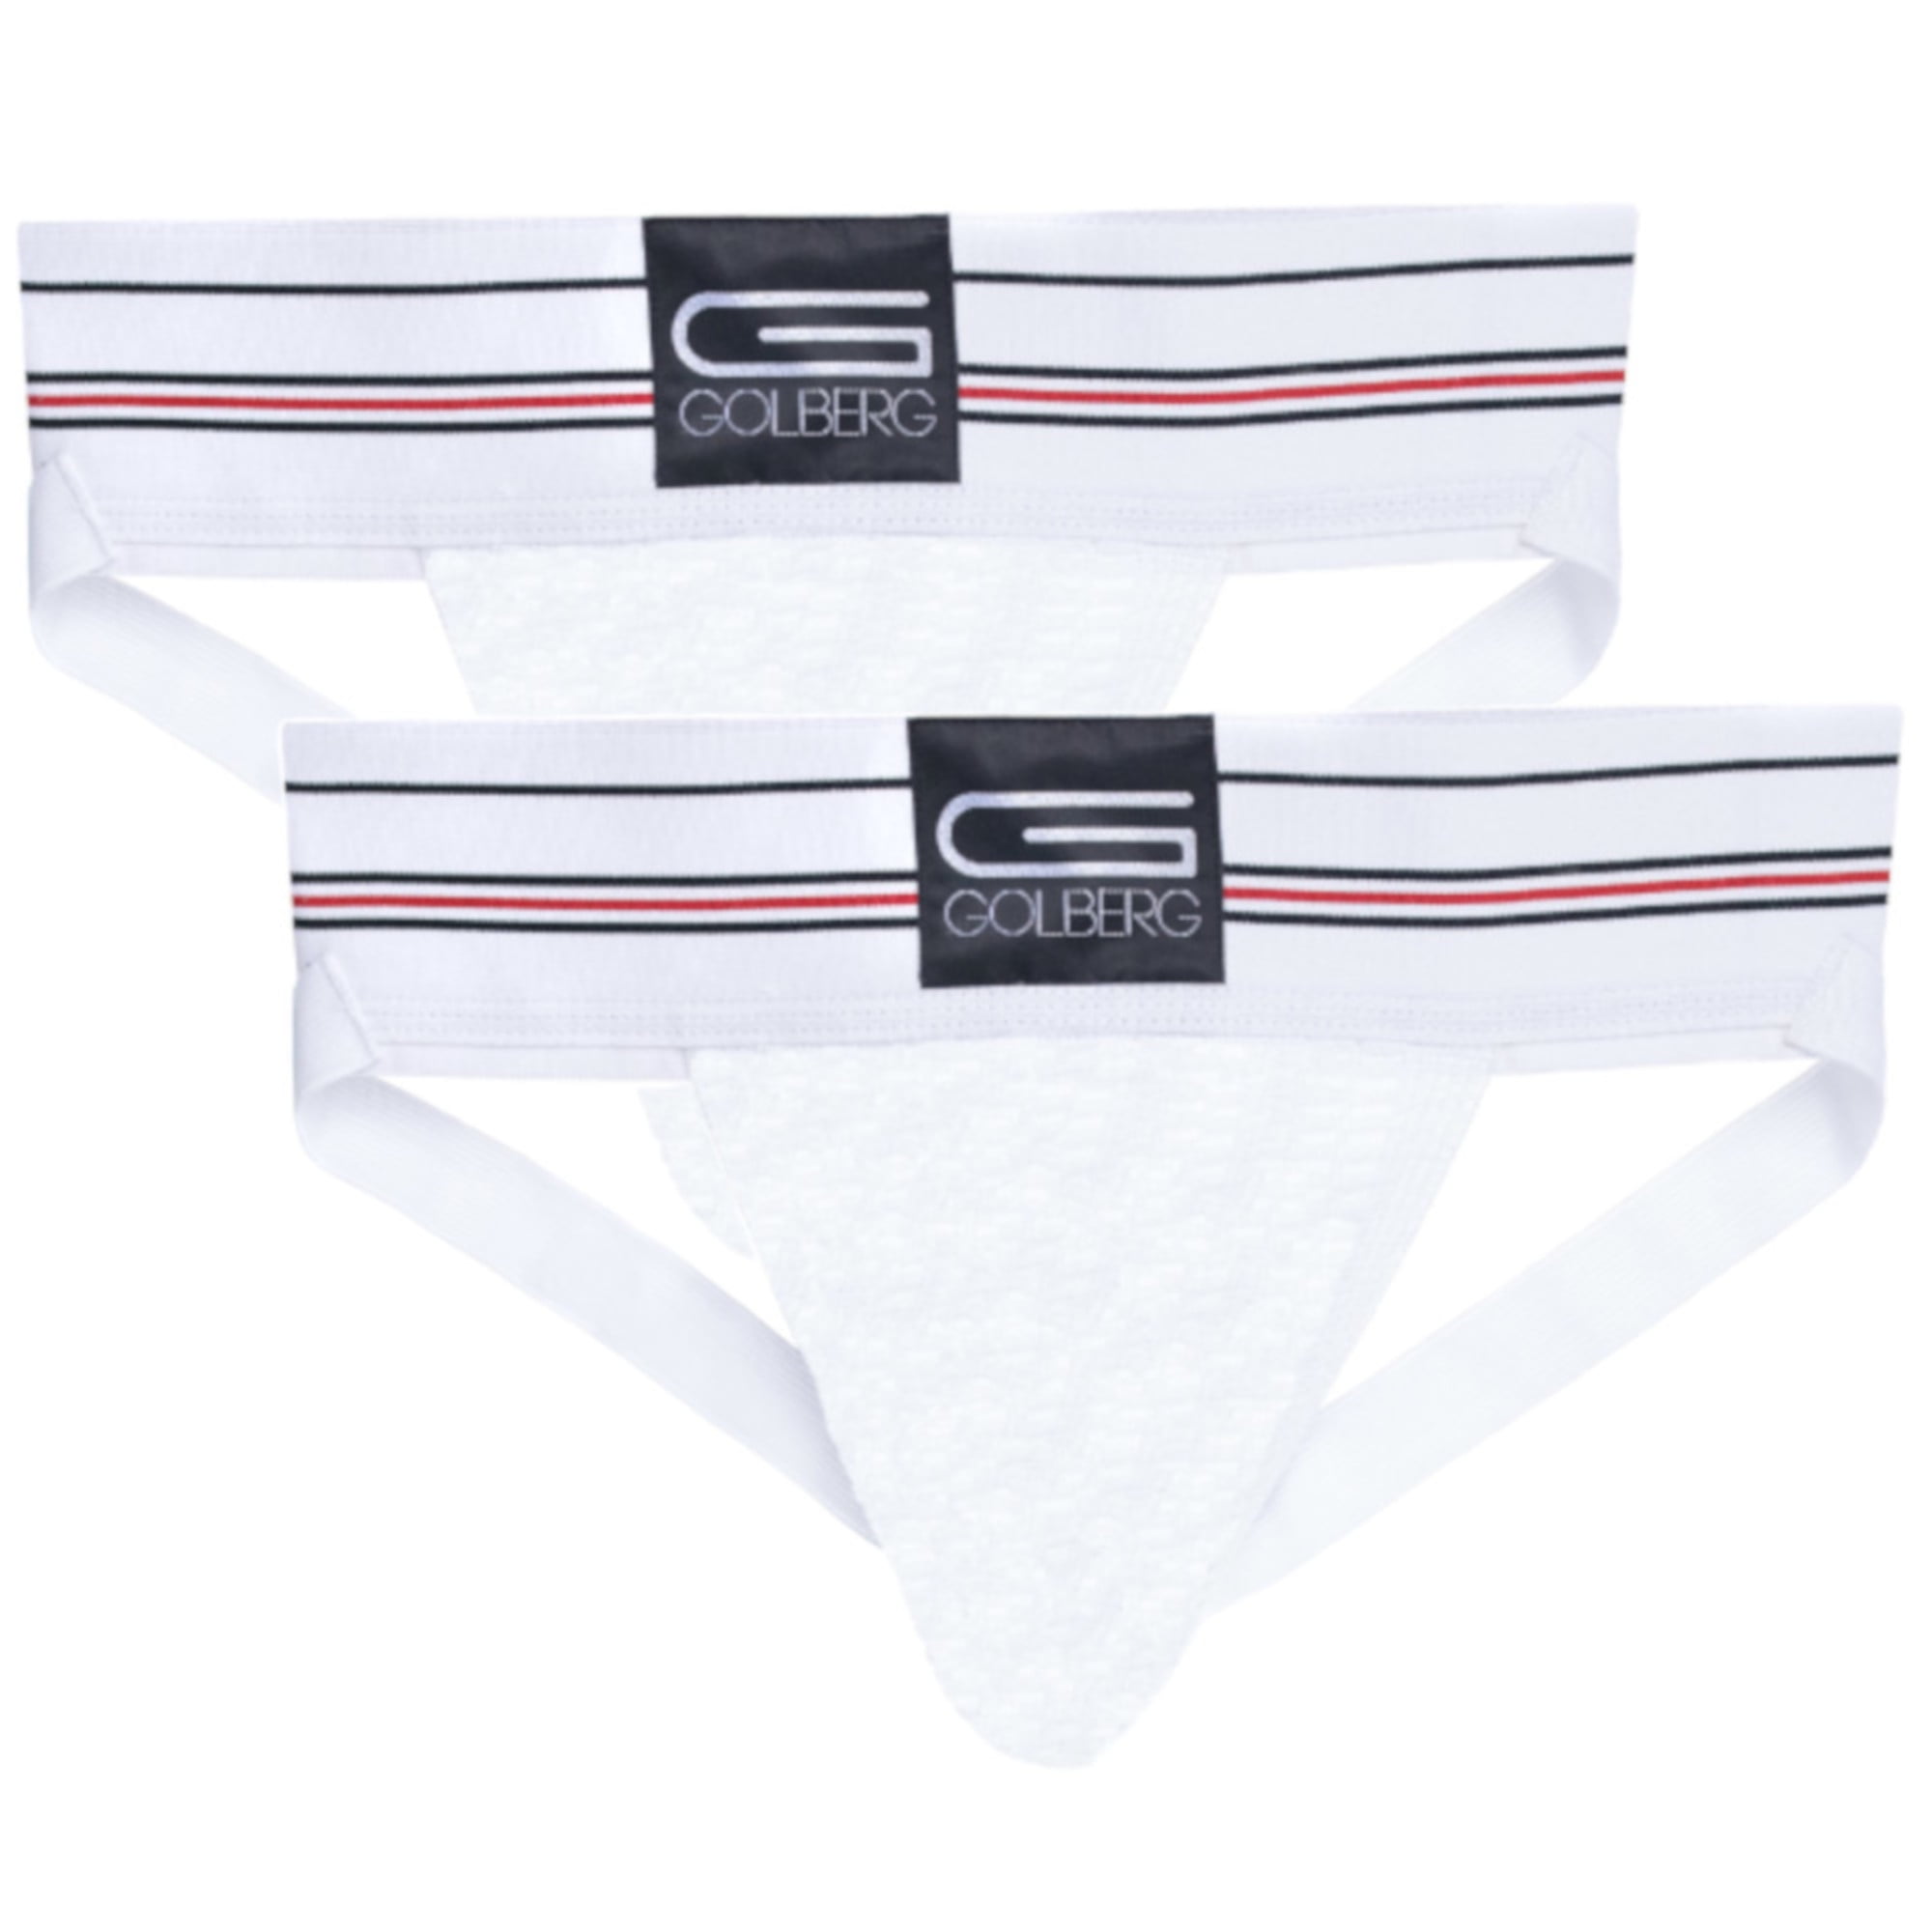 Extra Strength Elastic - Jock Strap Underwear 3 Pack GOLBERG G Men’s Athletic Supporters 